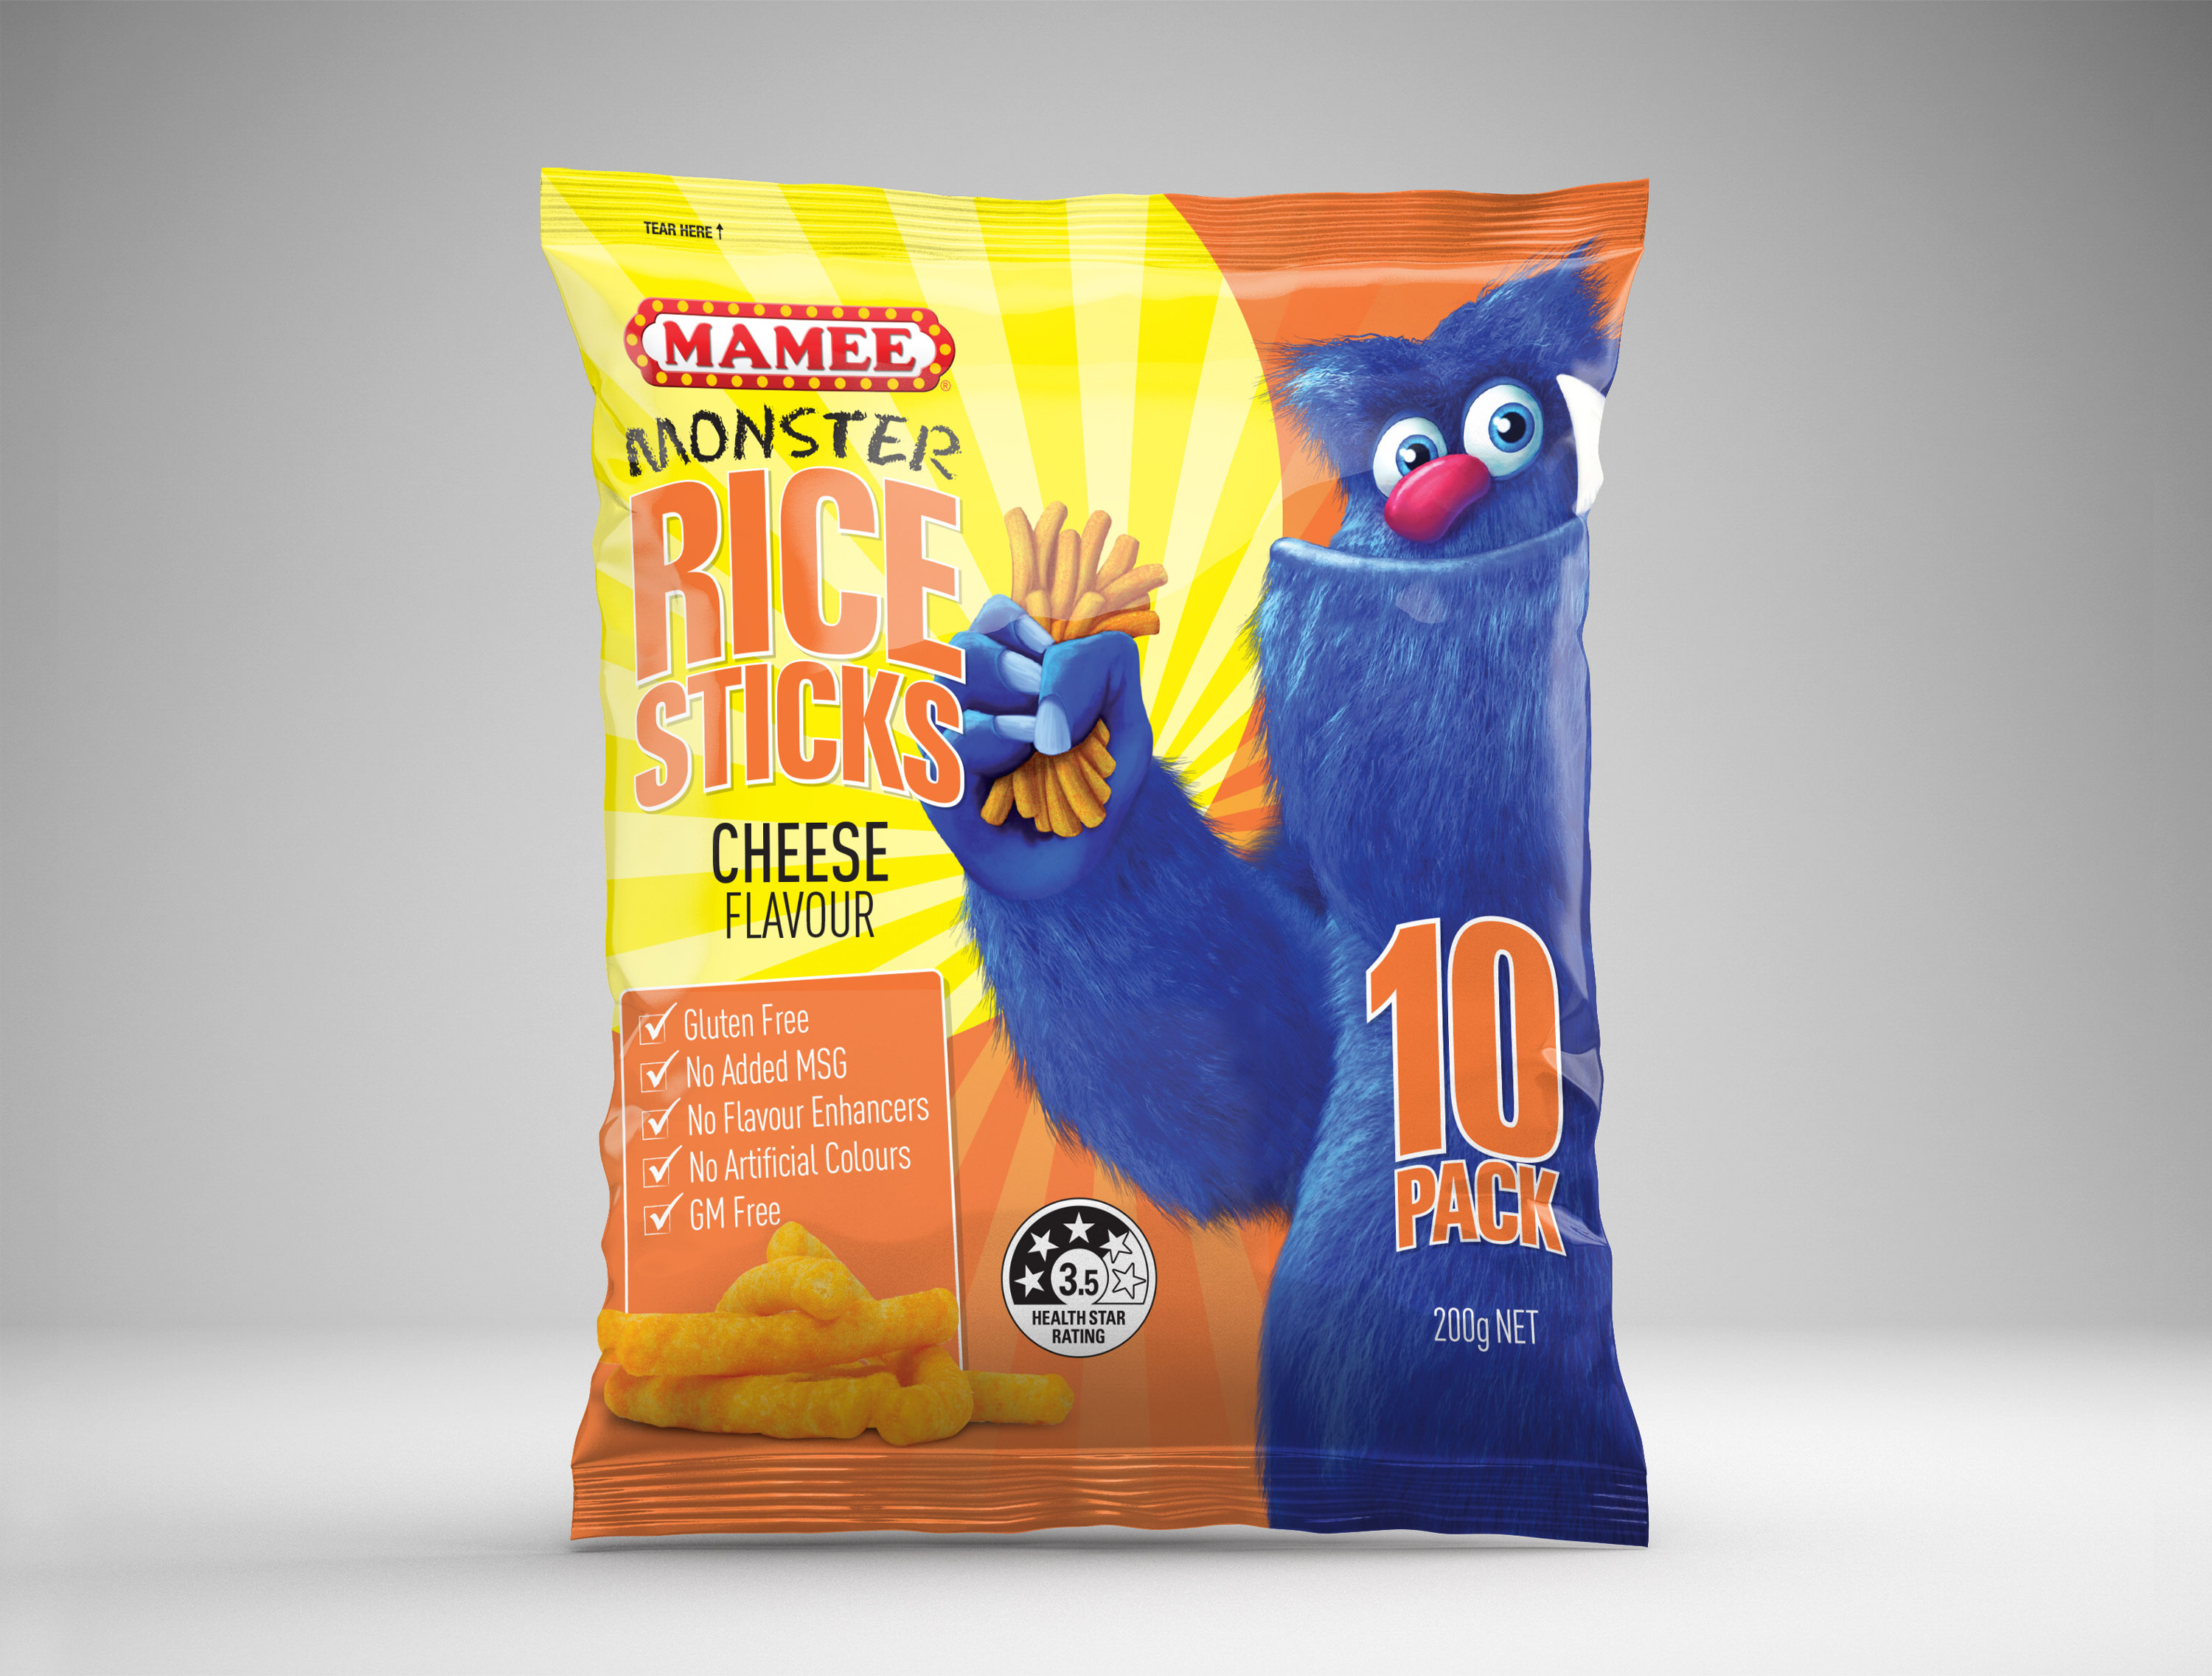 Mamee Rice Sticks Packaging Design